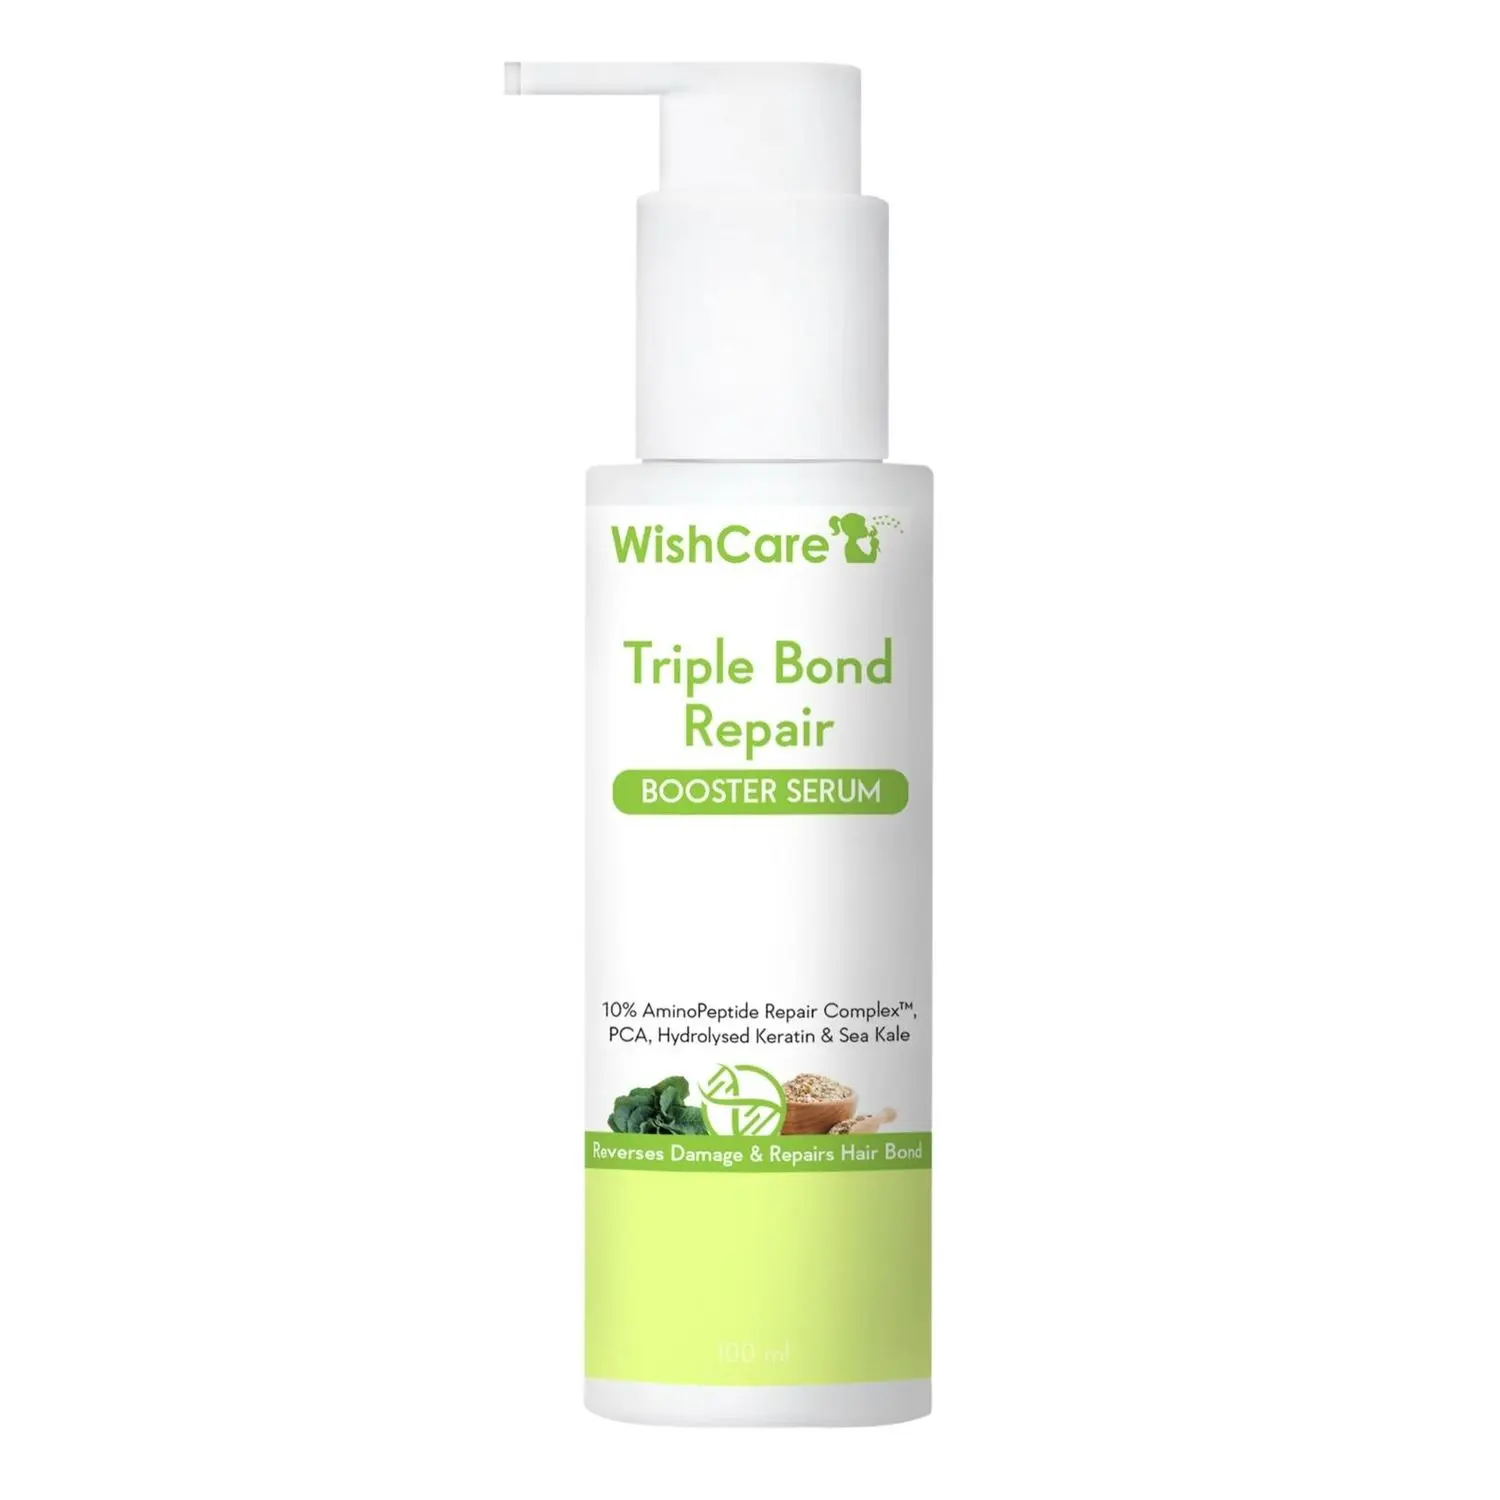 WishCare Triple Bond Repair Booster Serum - 10% AminoPeptide Complex - Repairs Damaged & Frizzy Hair 100 ml